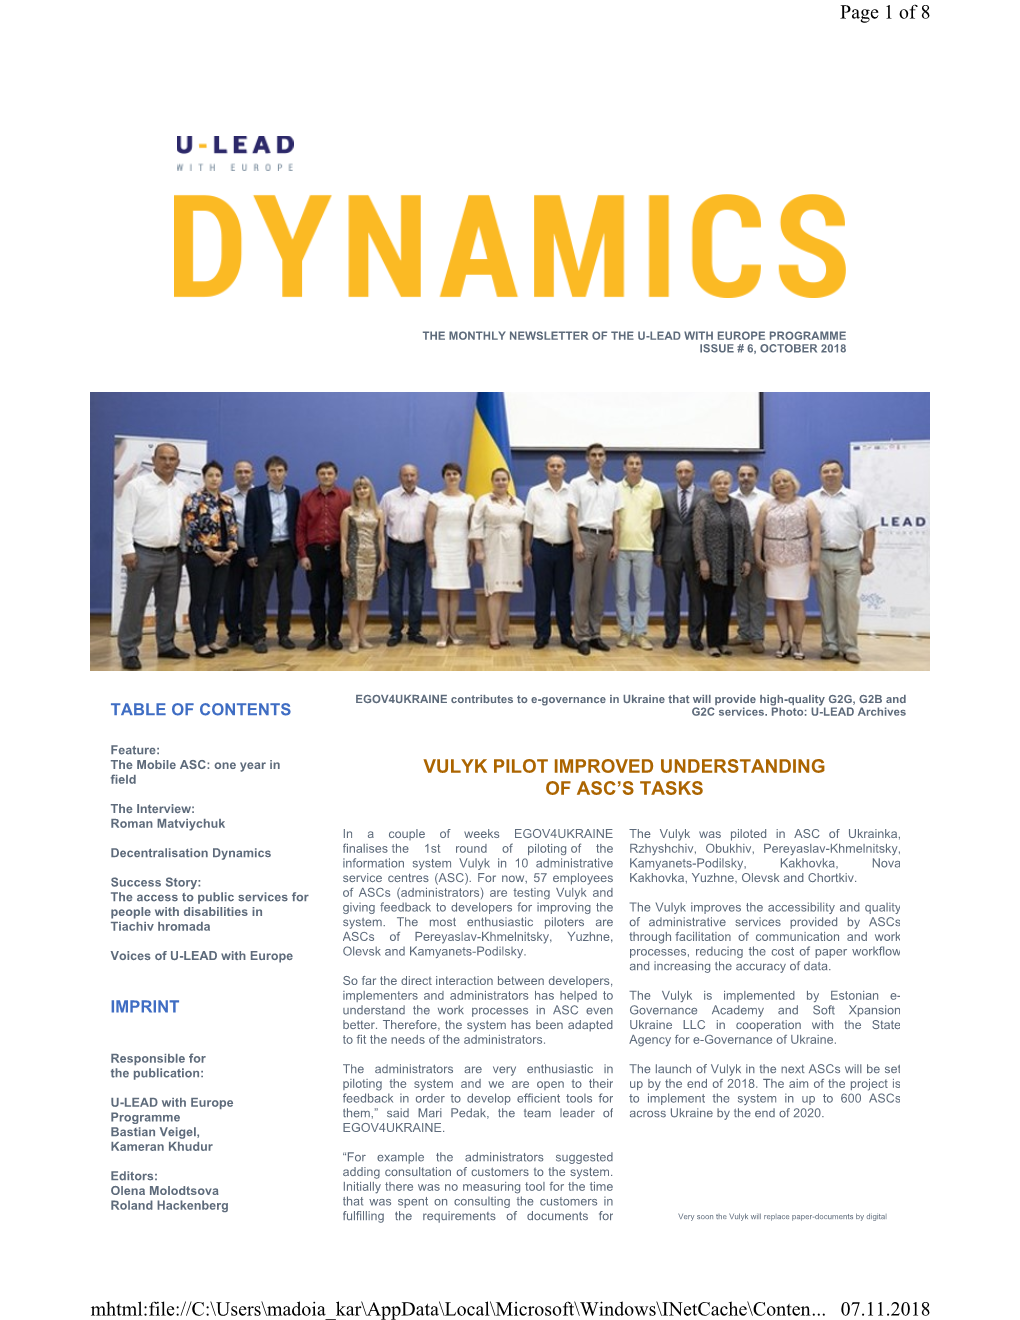 Dynamics Issue 6 Eng.Pdf